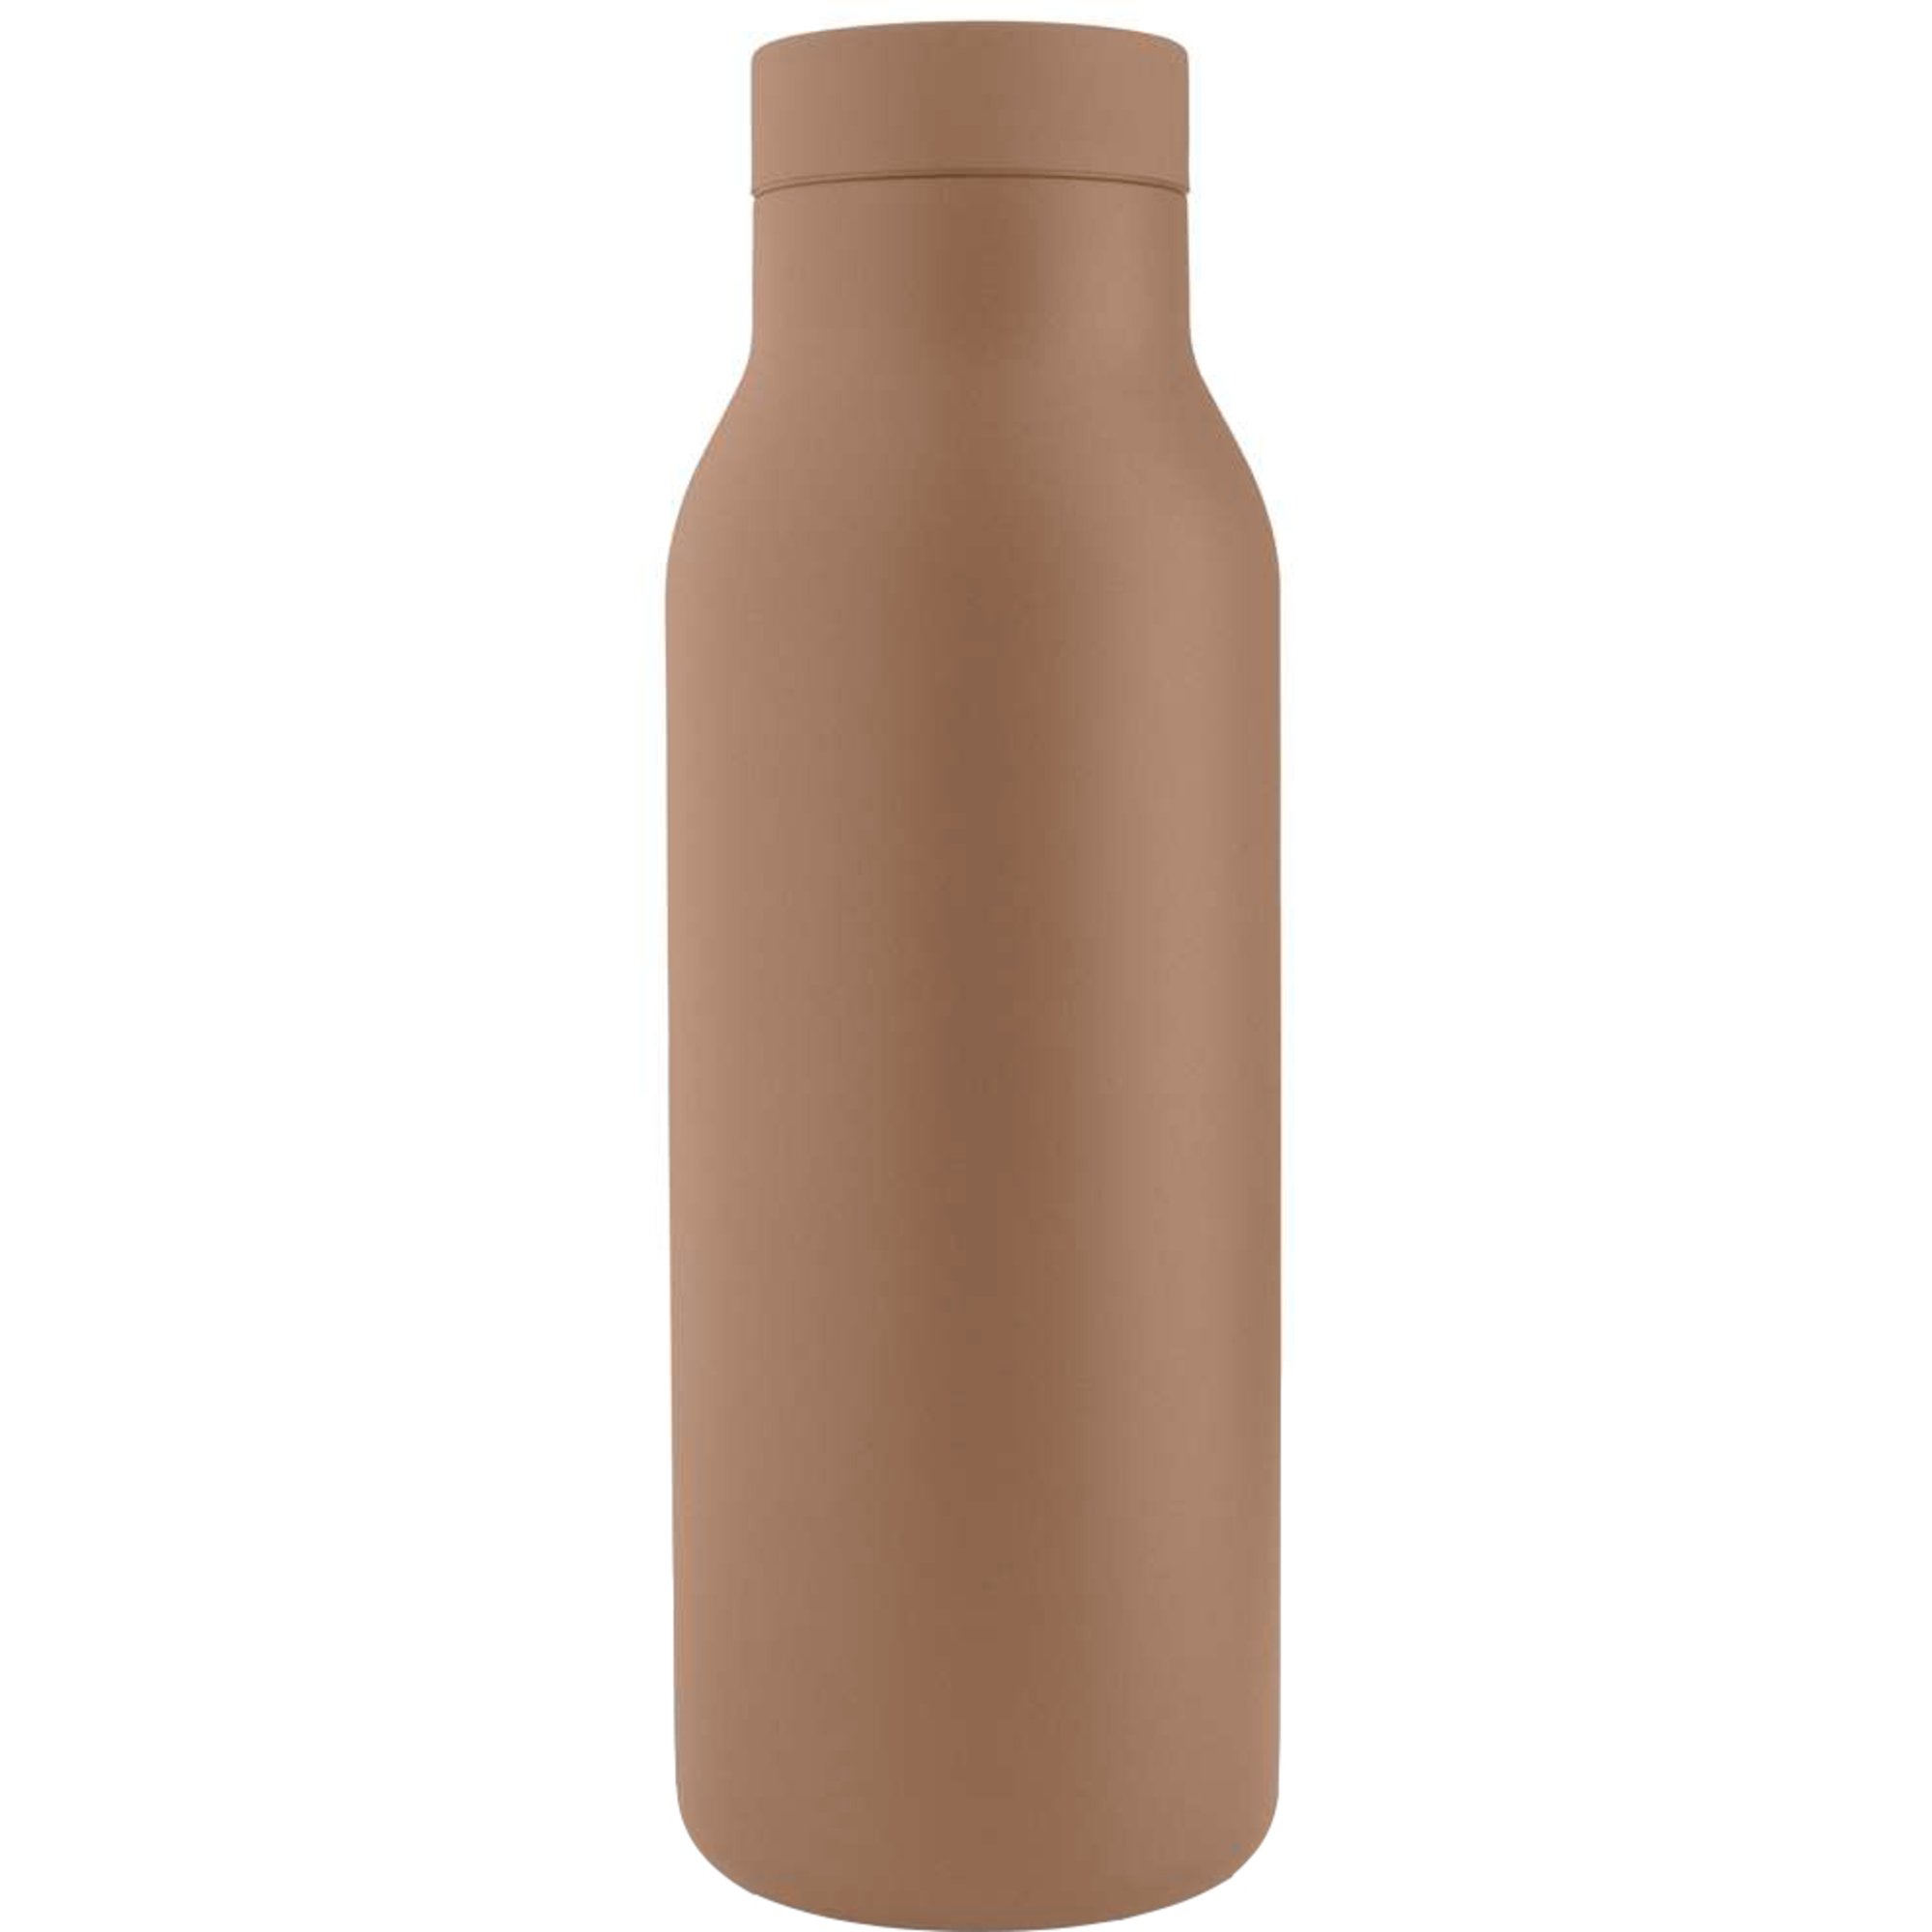 Eva Solo Urban termoflaske 0,5 liter, mocca Termoflaske